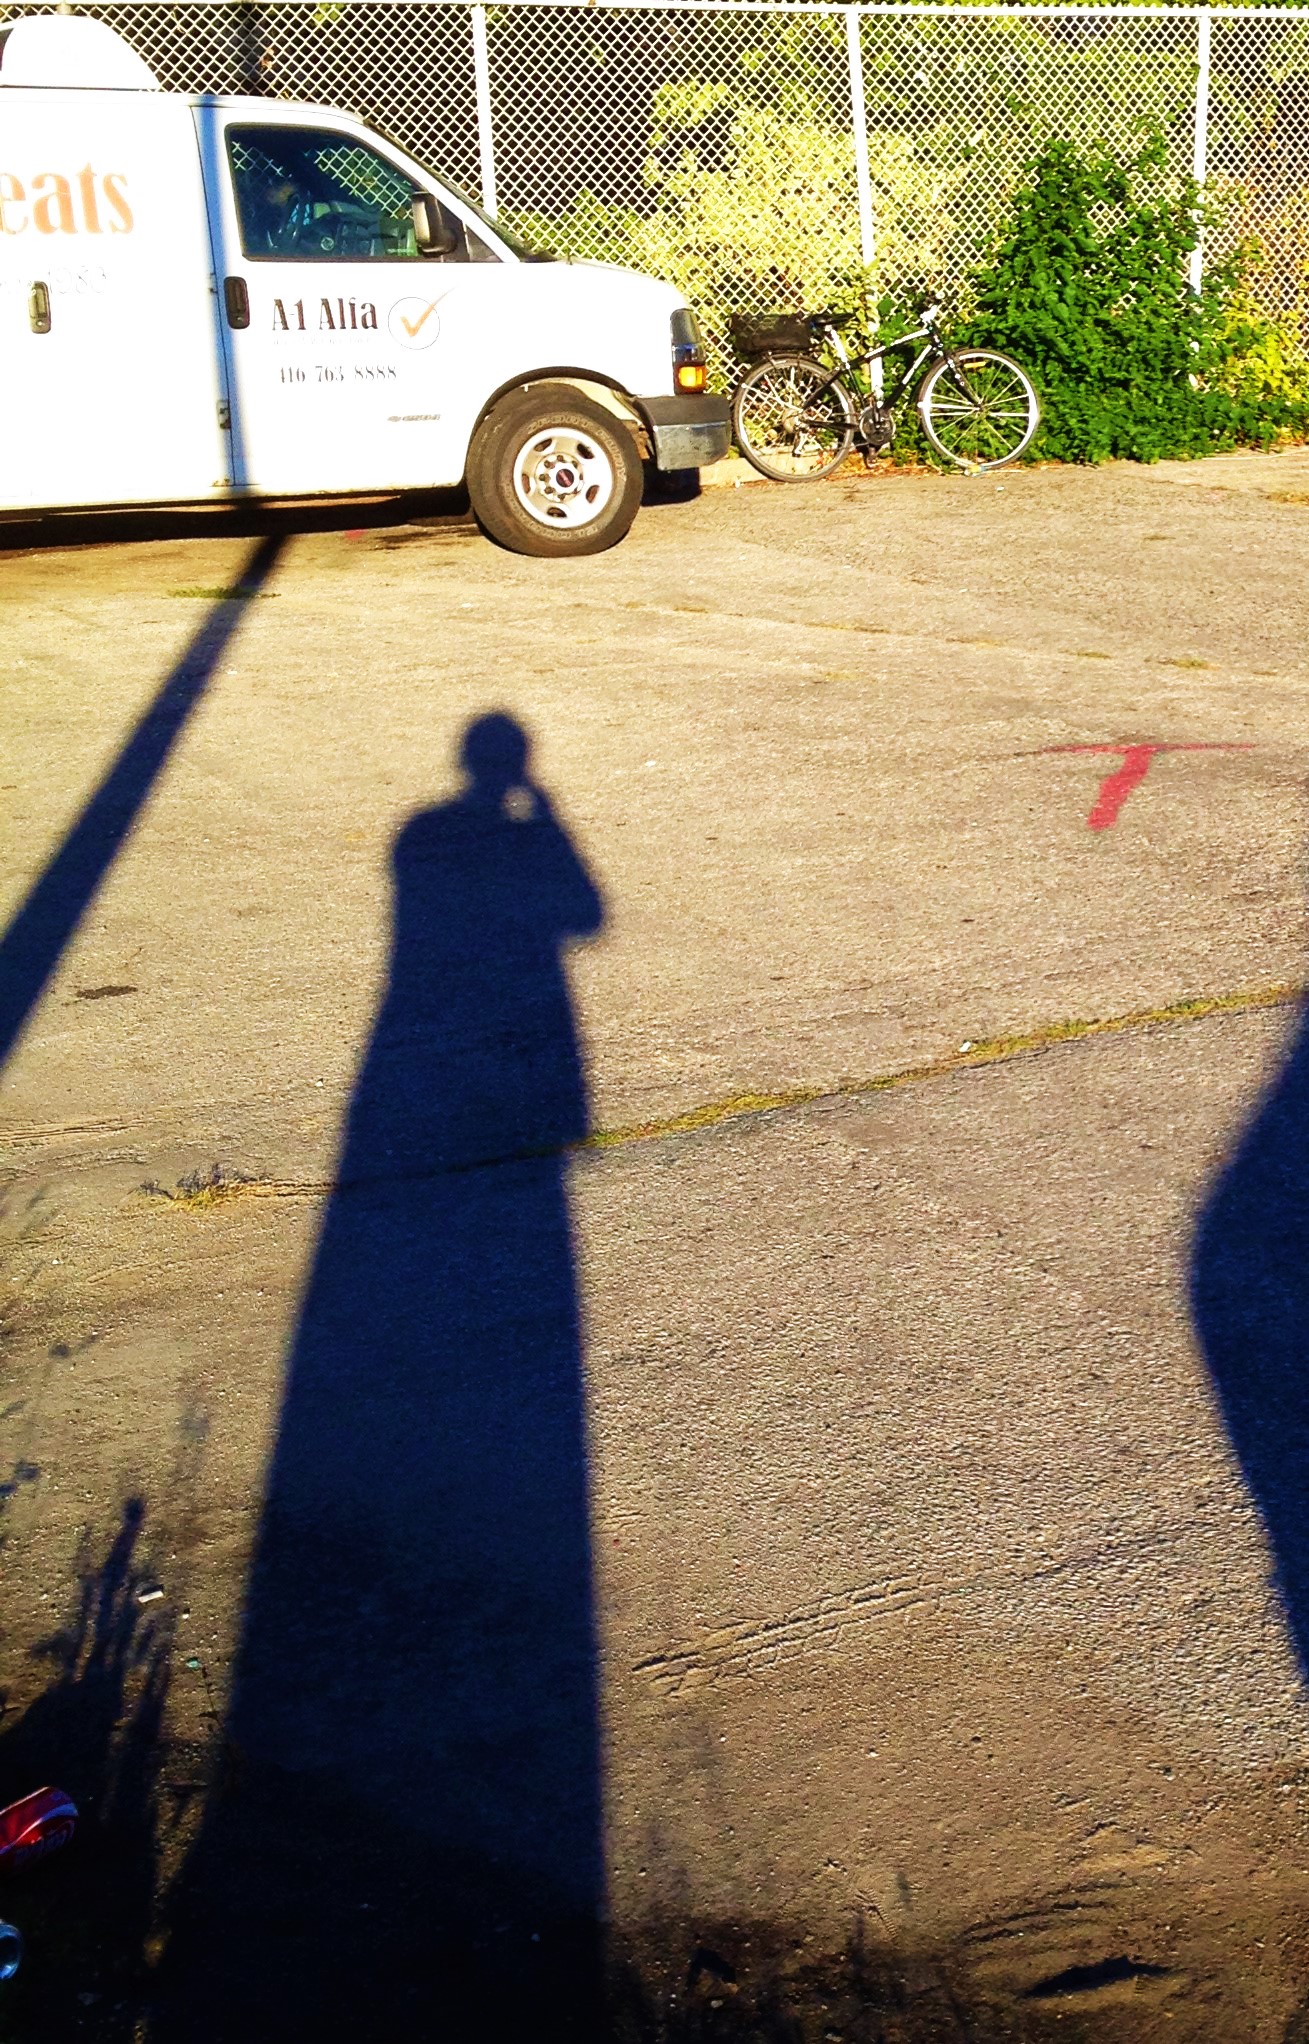 5) parking lot shadows